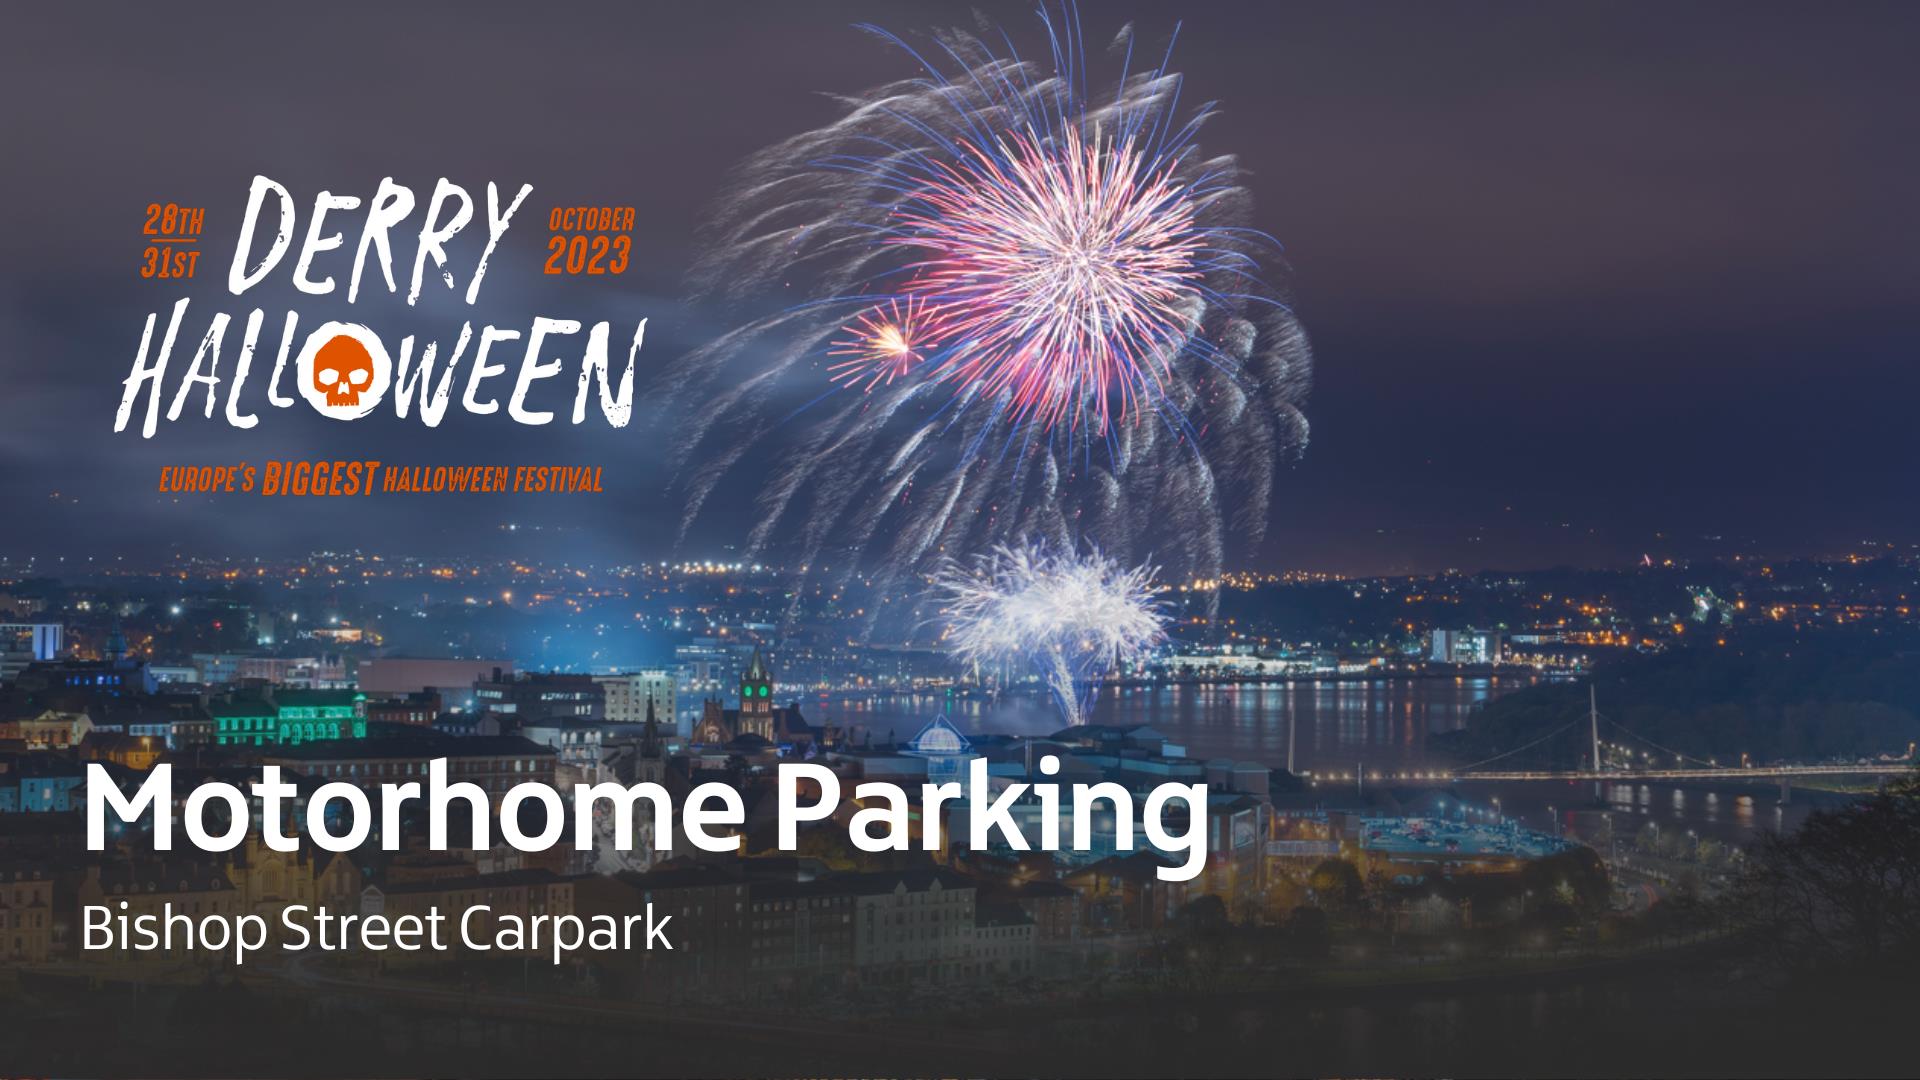 Poster promoting Motorhome Parking at Bishop Street Carpark for Derry Halloween